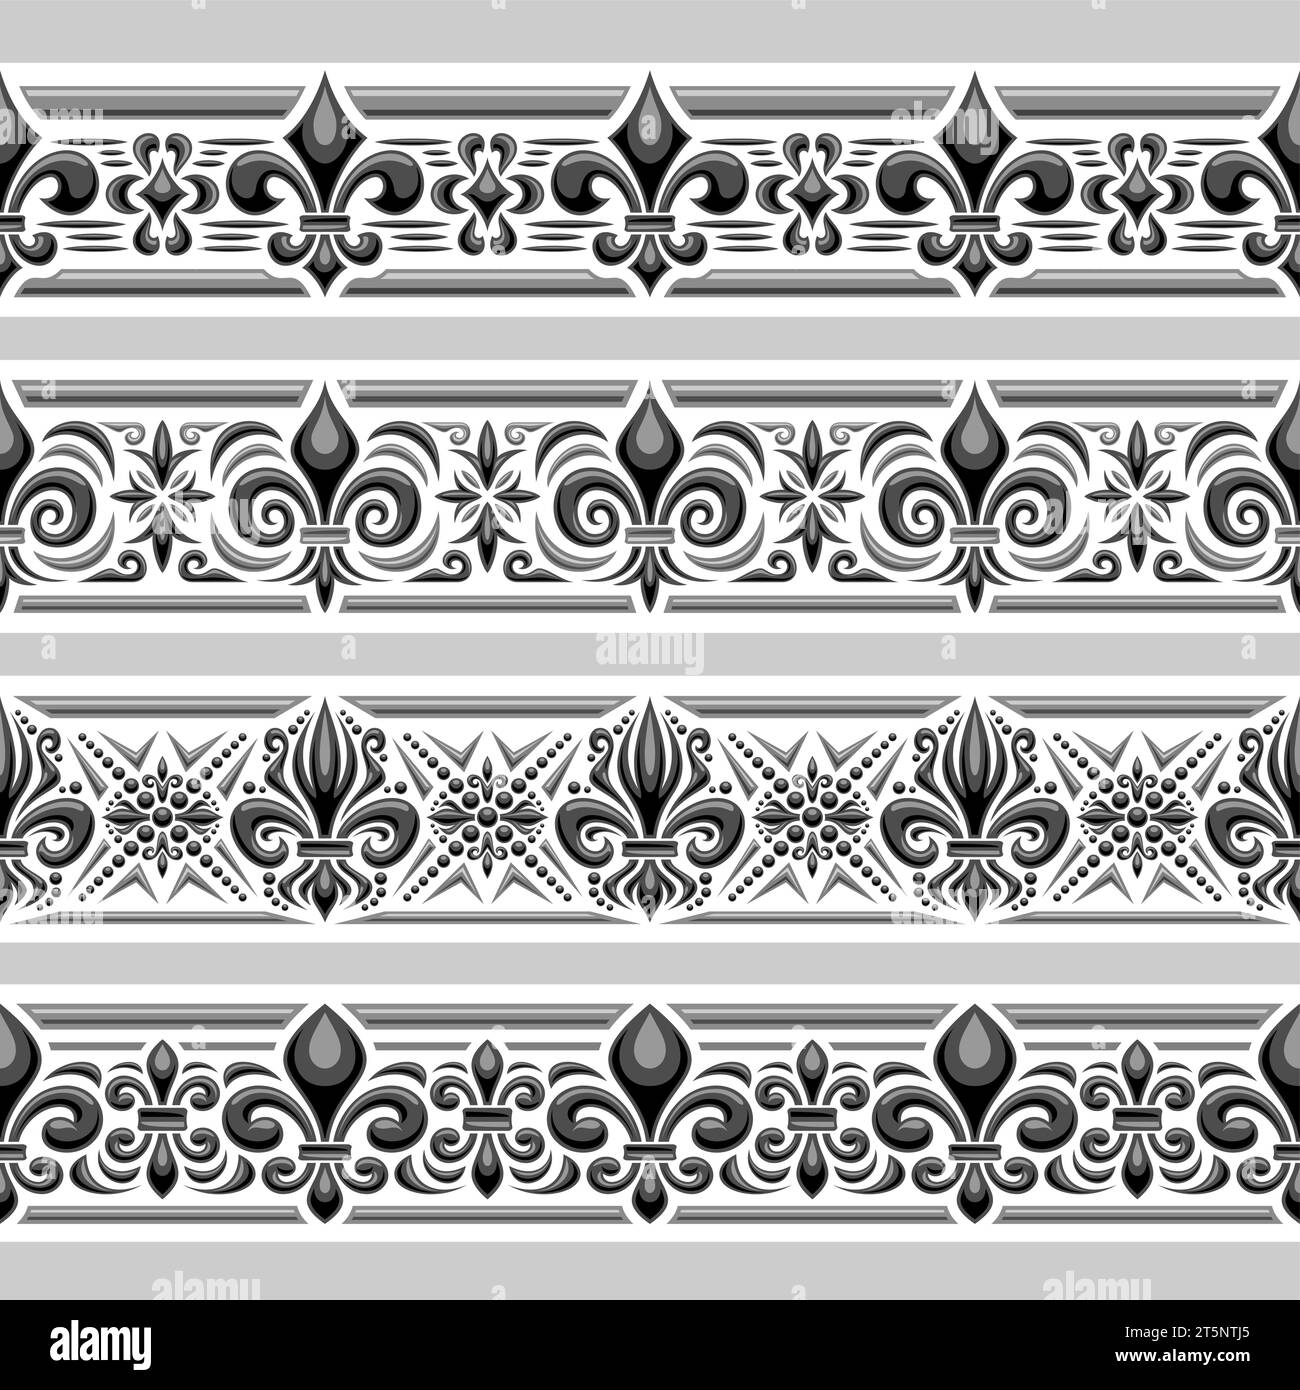 Vector Fleur de Lis Ornament, seamless borders with illustration of grey embroidery fleur de lis art patterns, horizontal repeat border with elegant m Stock Vector